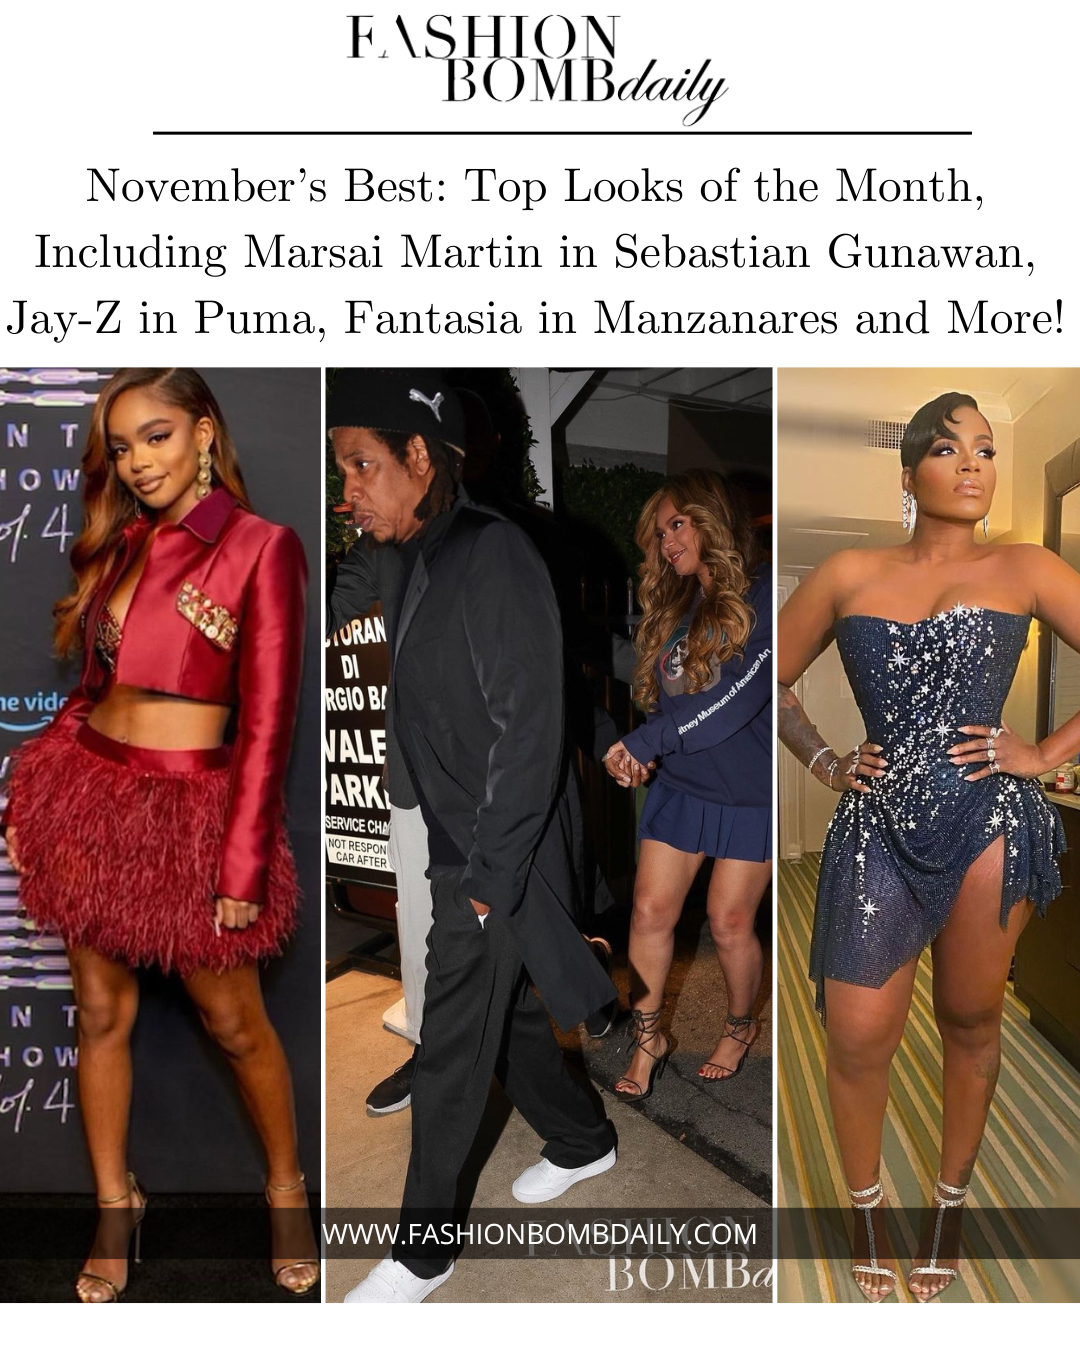 Top Looks of the Month, Including Marsai Martin in Sebastian Gunawan, Jay-Z in Puma, Fantasia in Manzanares and More!